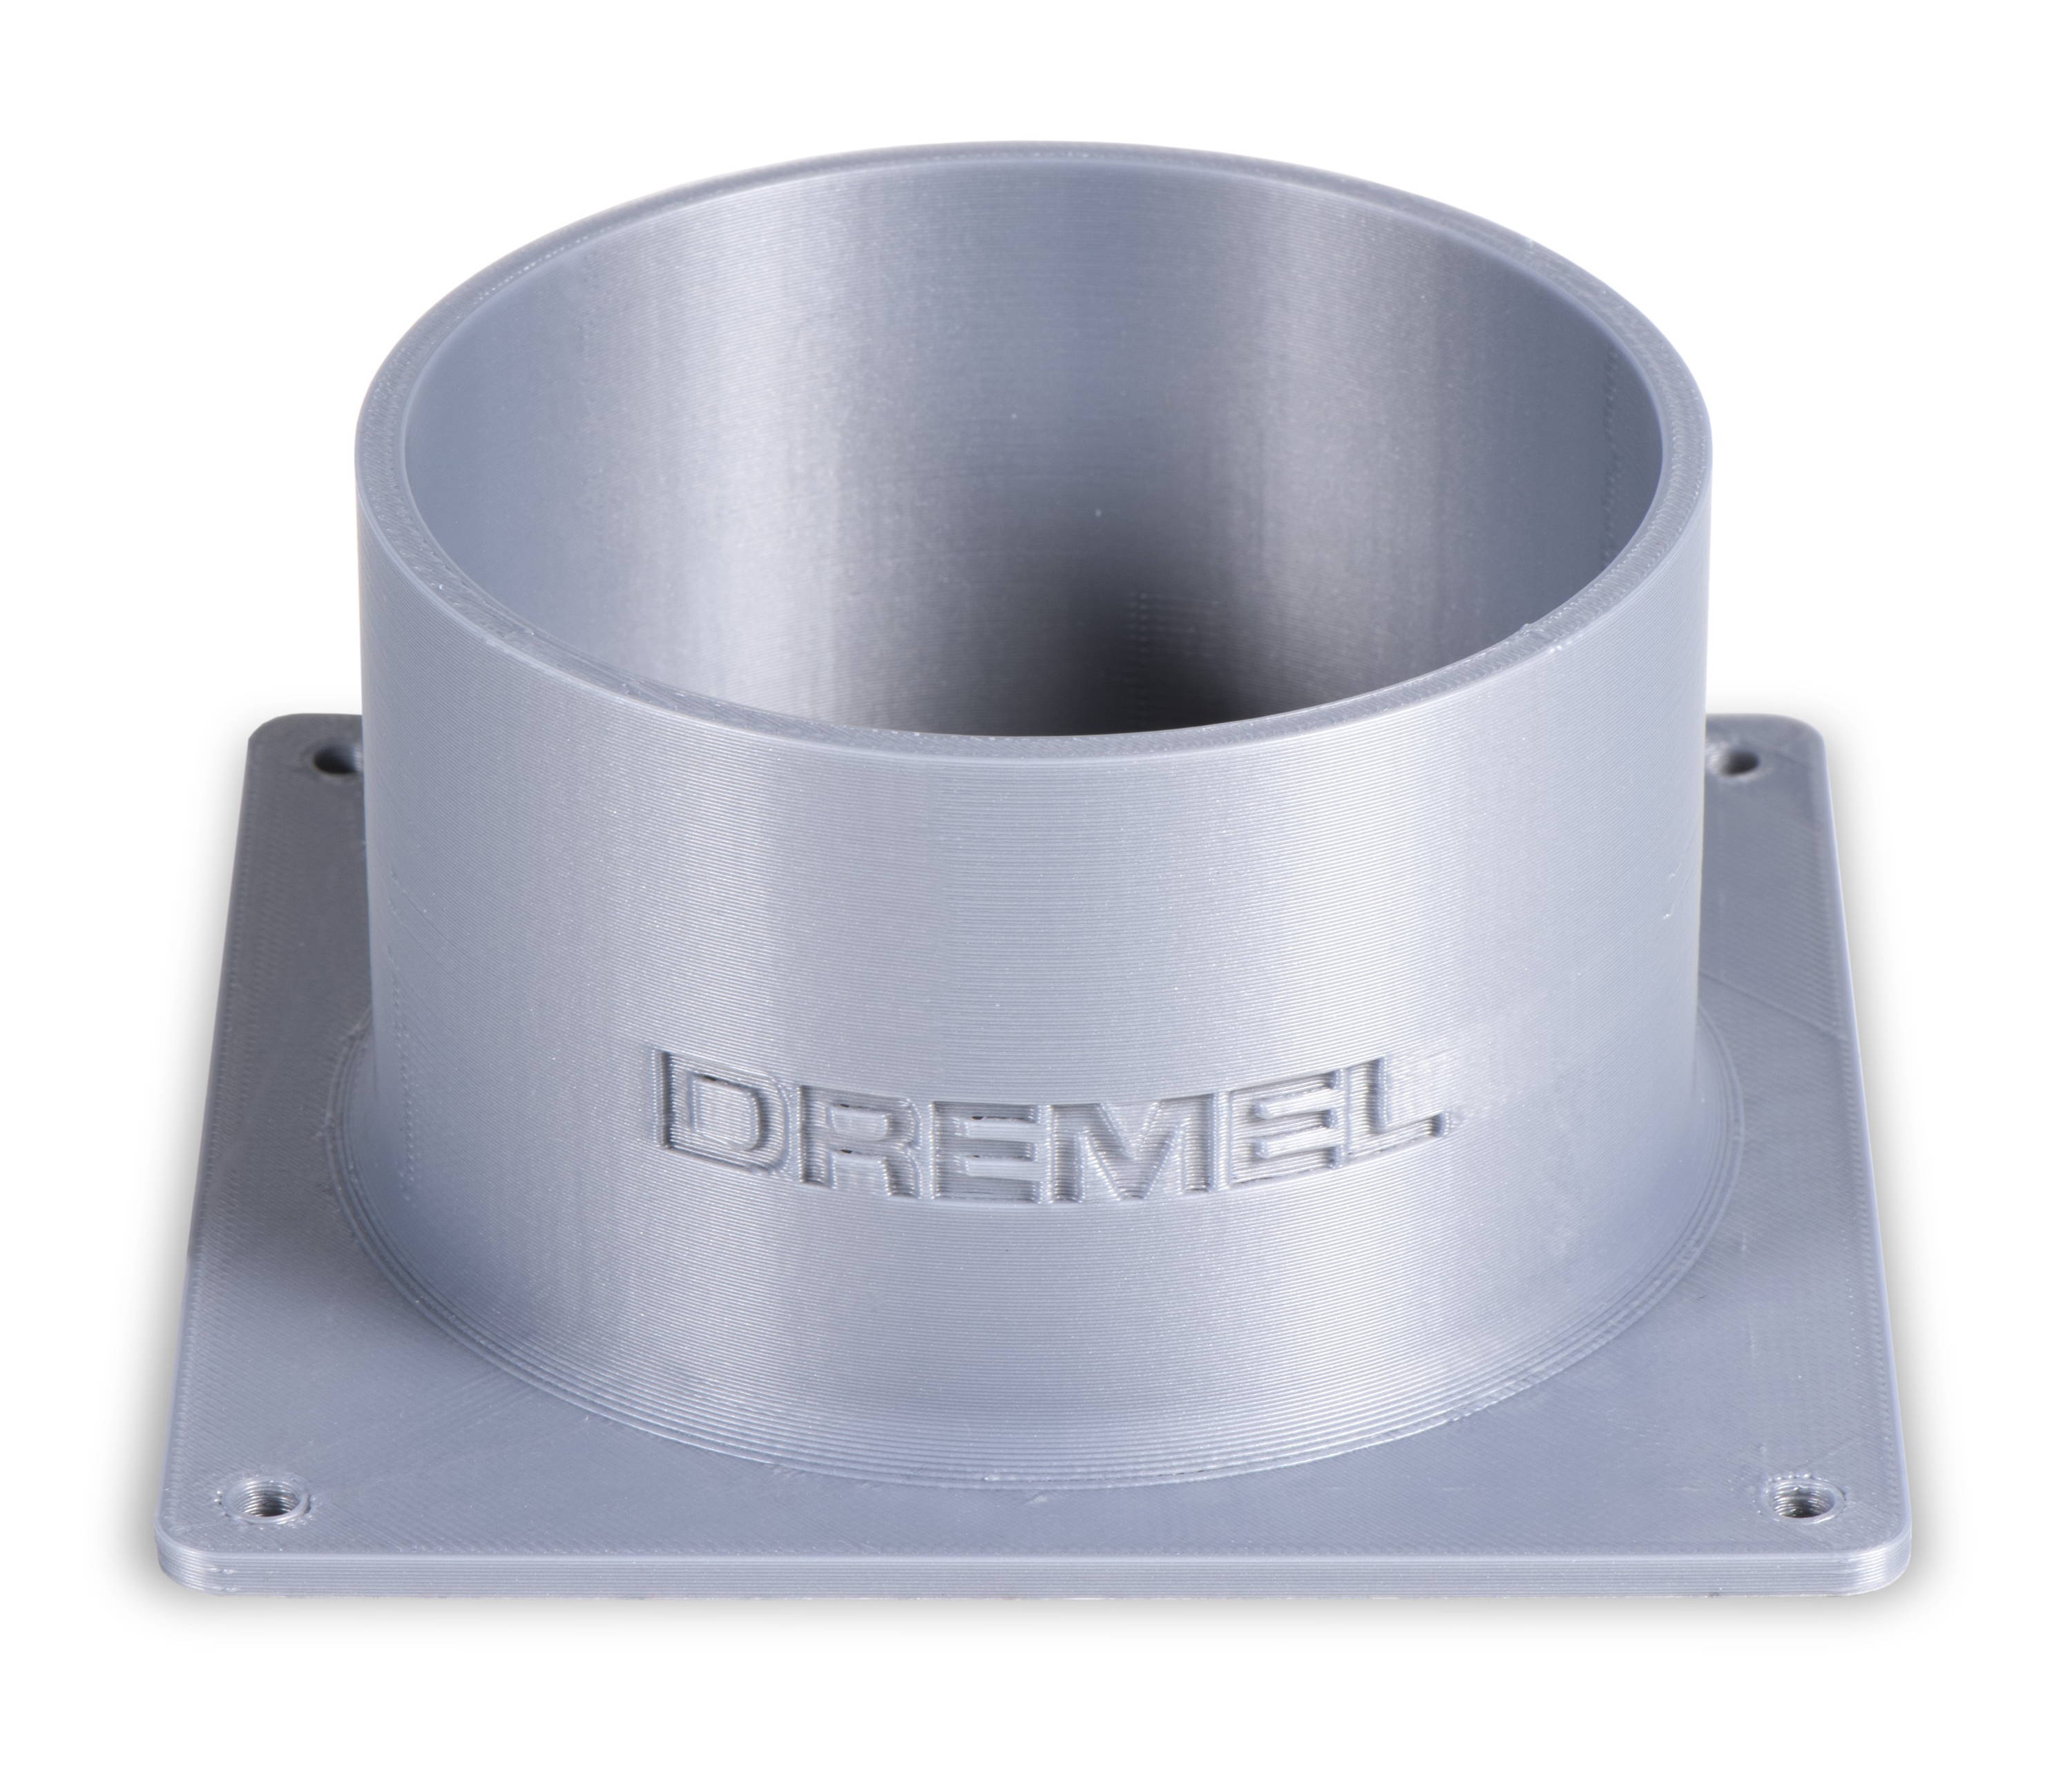 3D printed bracket in silver filament showing Dremel logo, printed on Dremel 3D45 printer